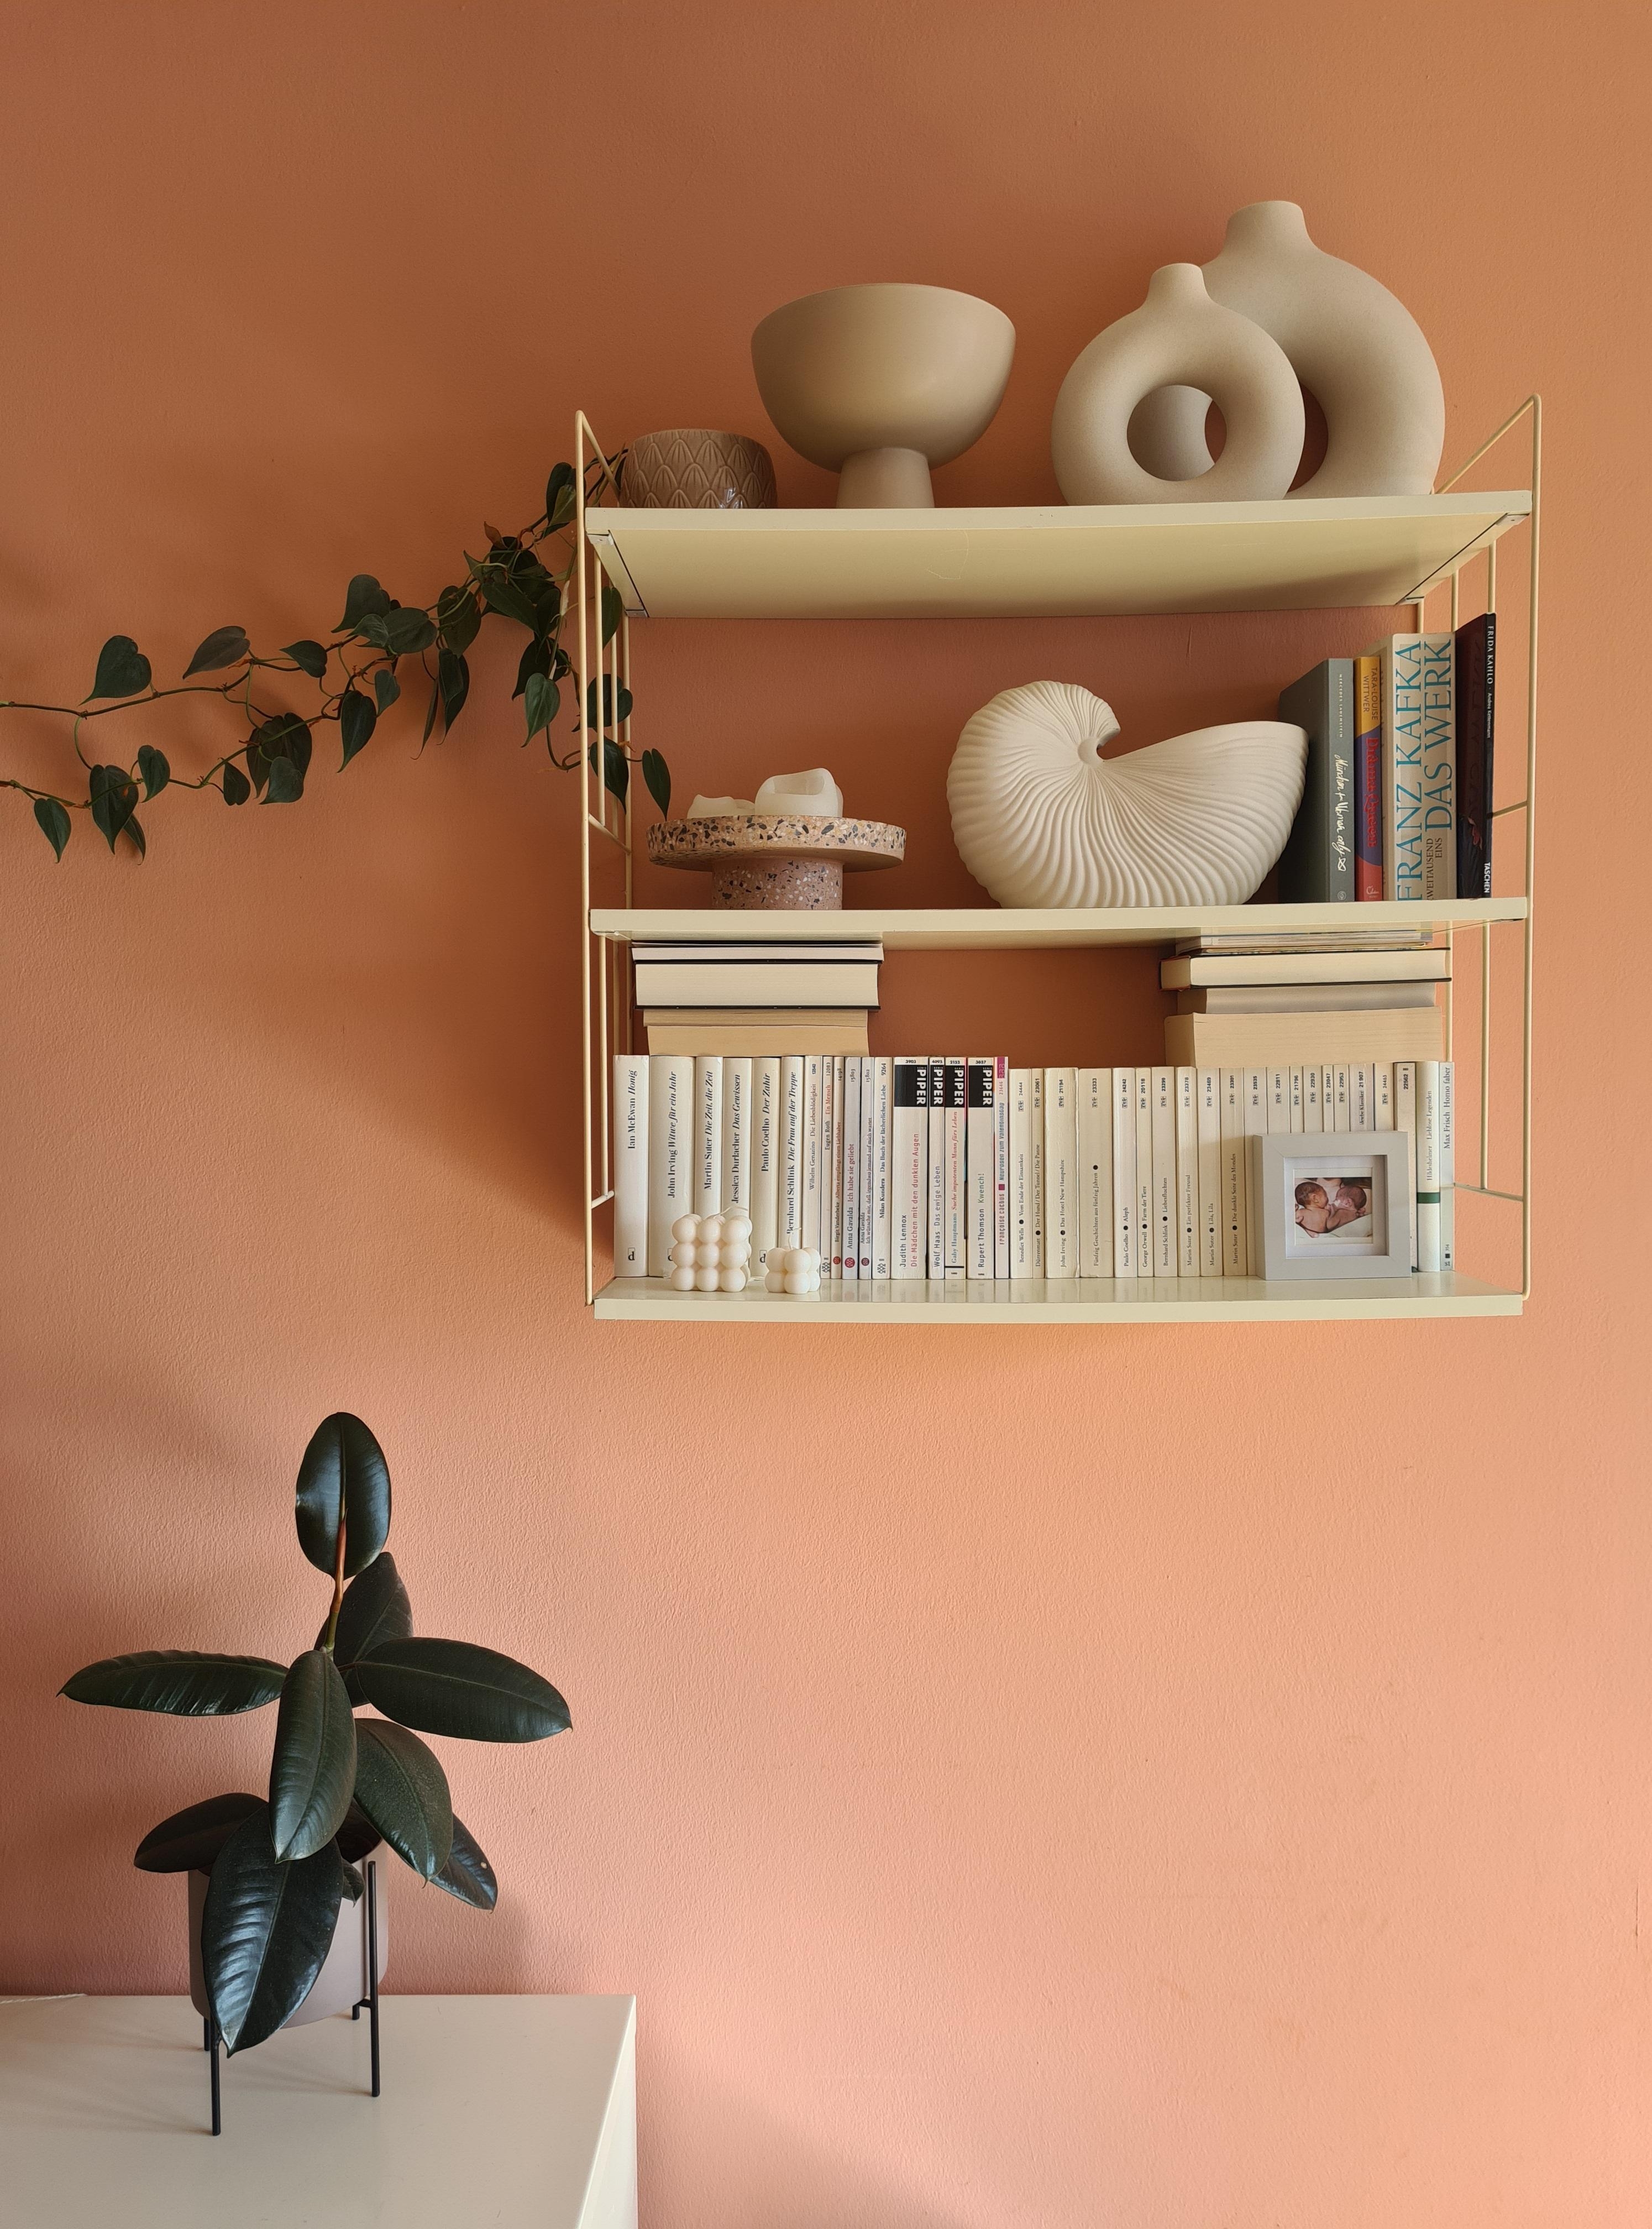 Peach Fuzz im Wohnzimmer 🙌
#wandfarbe #peachfuzz #bücherregal #wandregal #efeutute #pflanzen #vasen